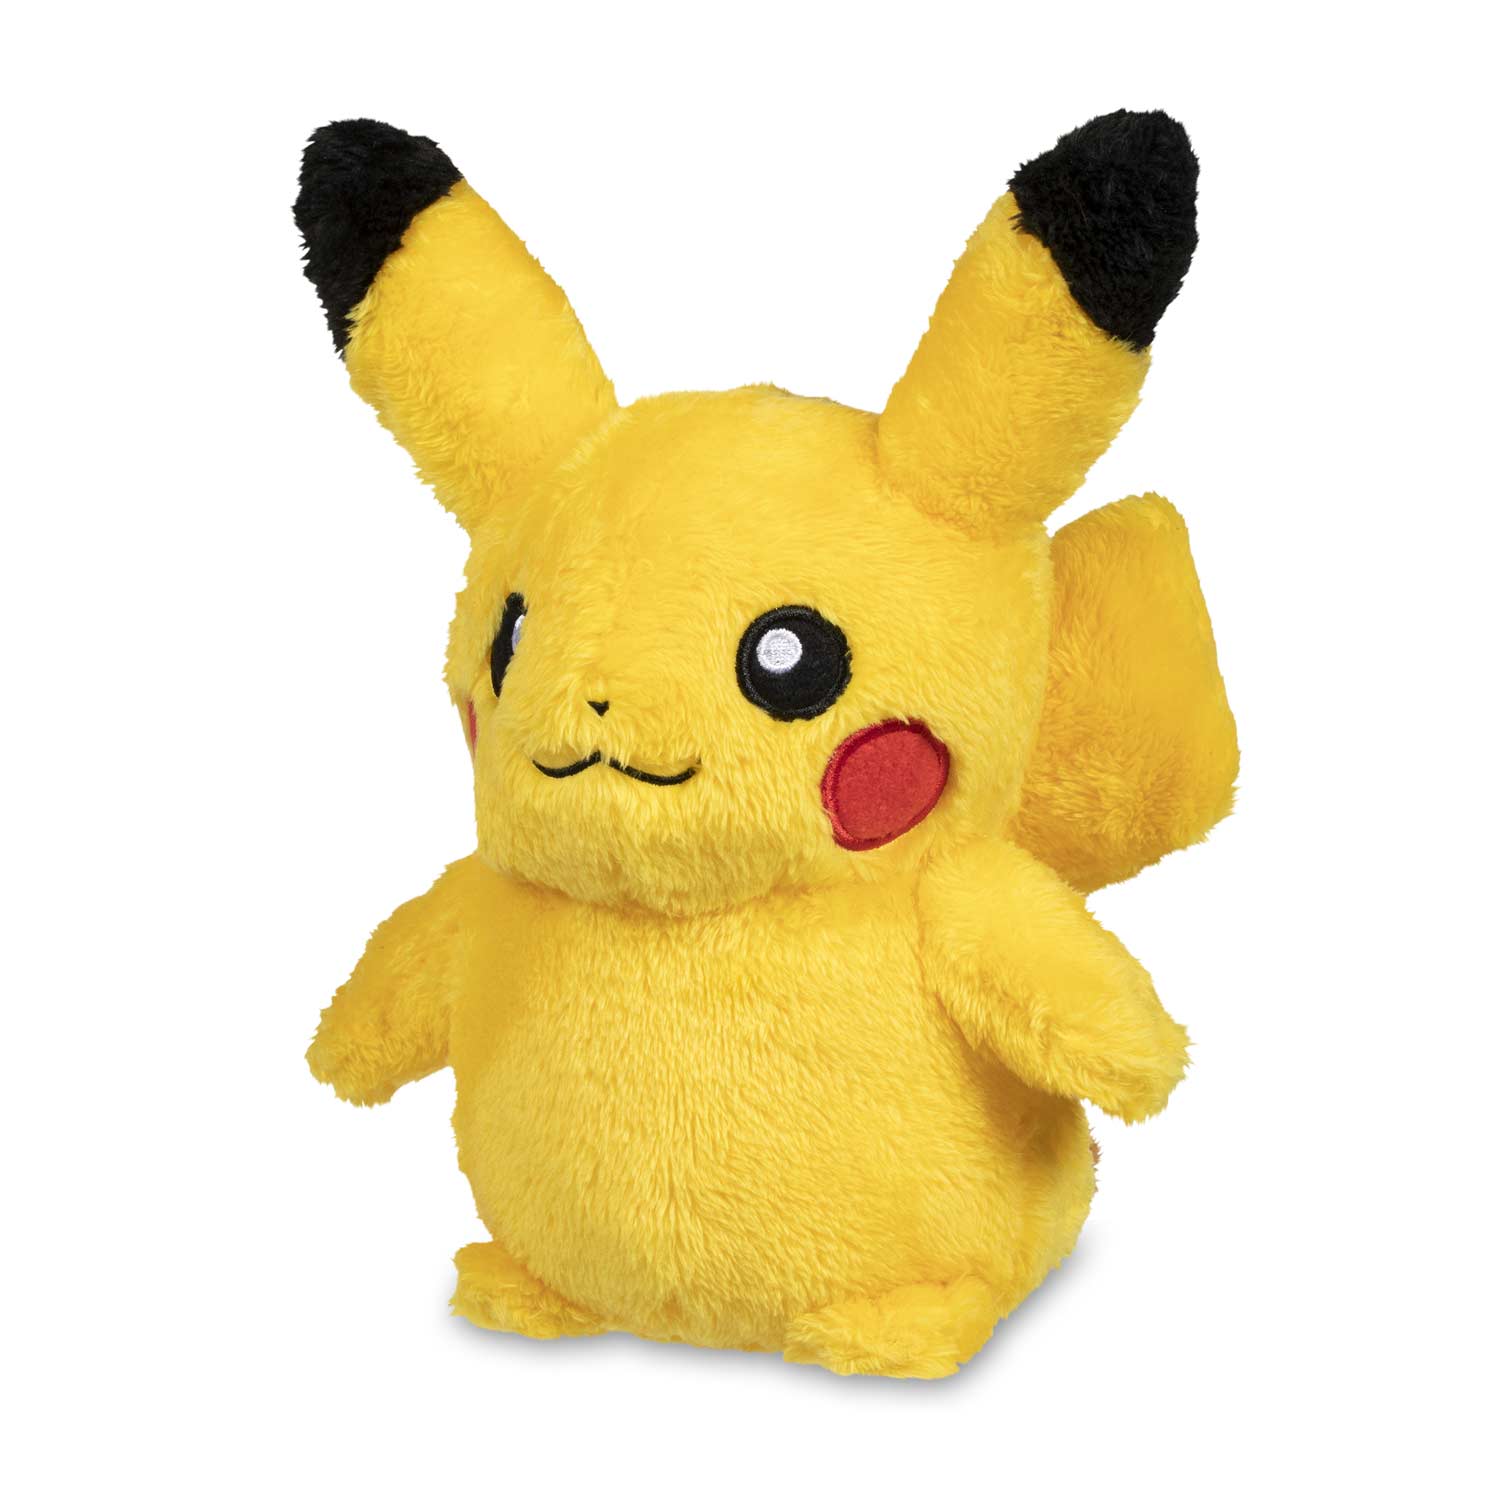 official pikachu plush